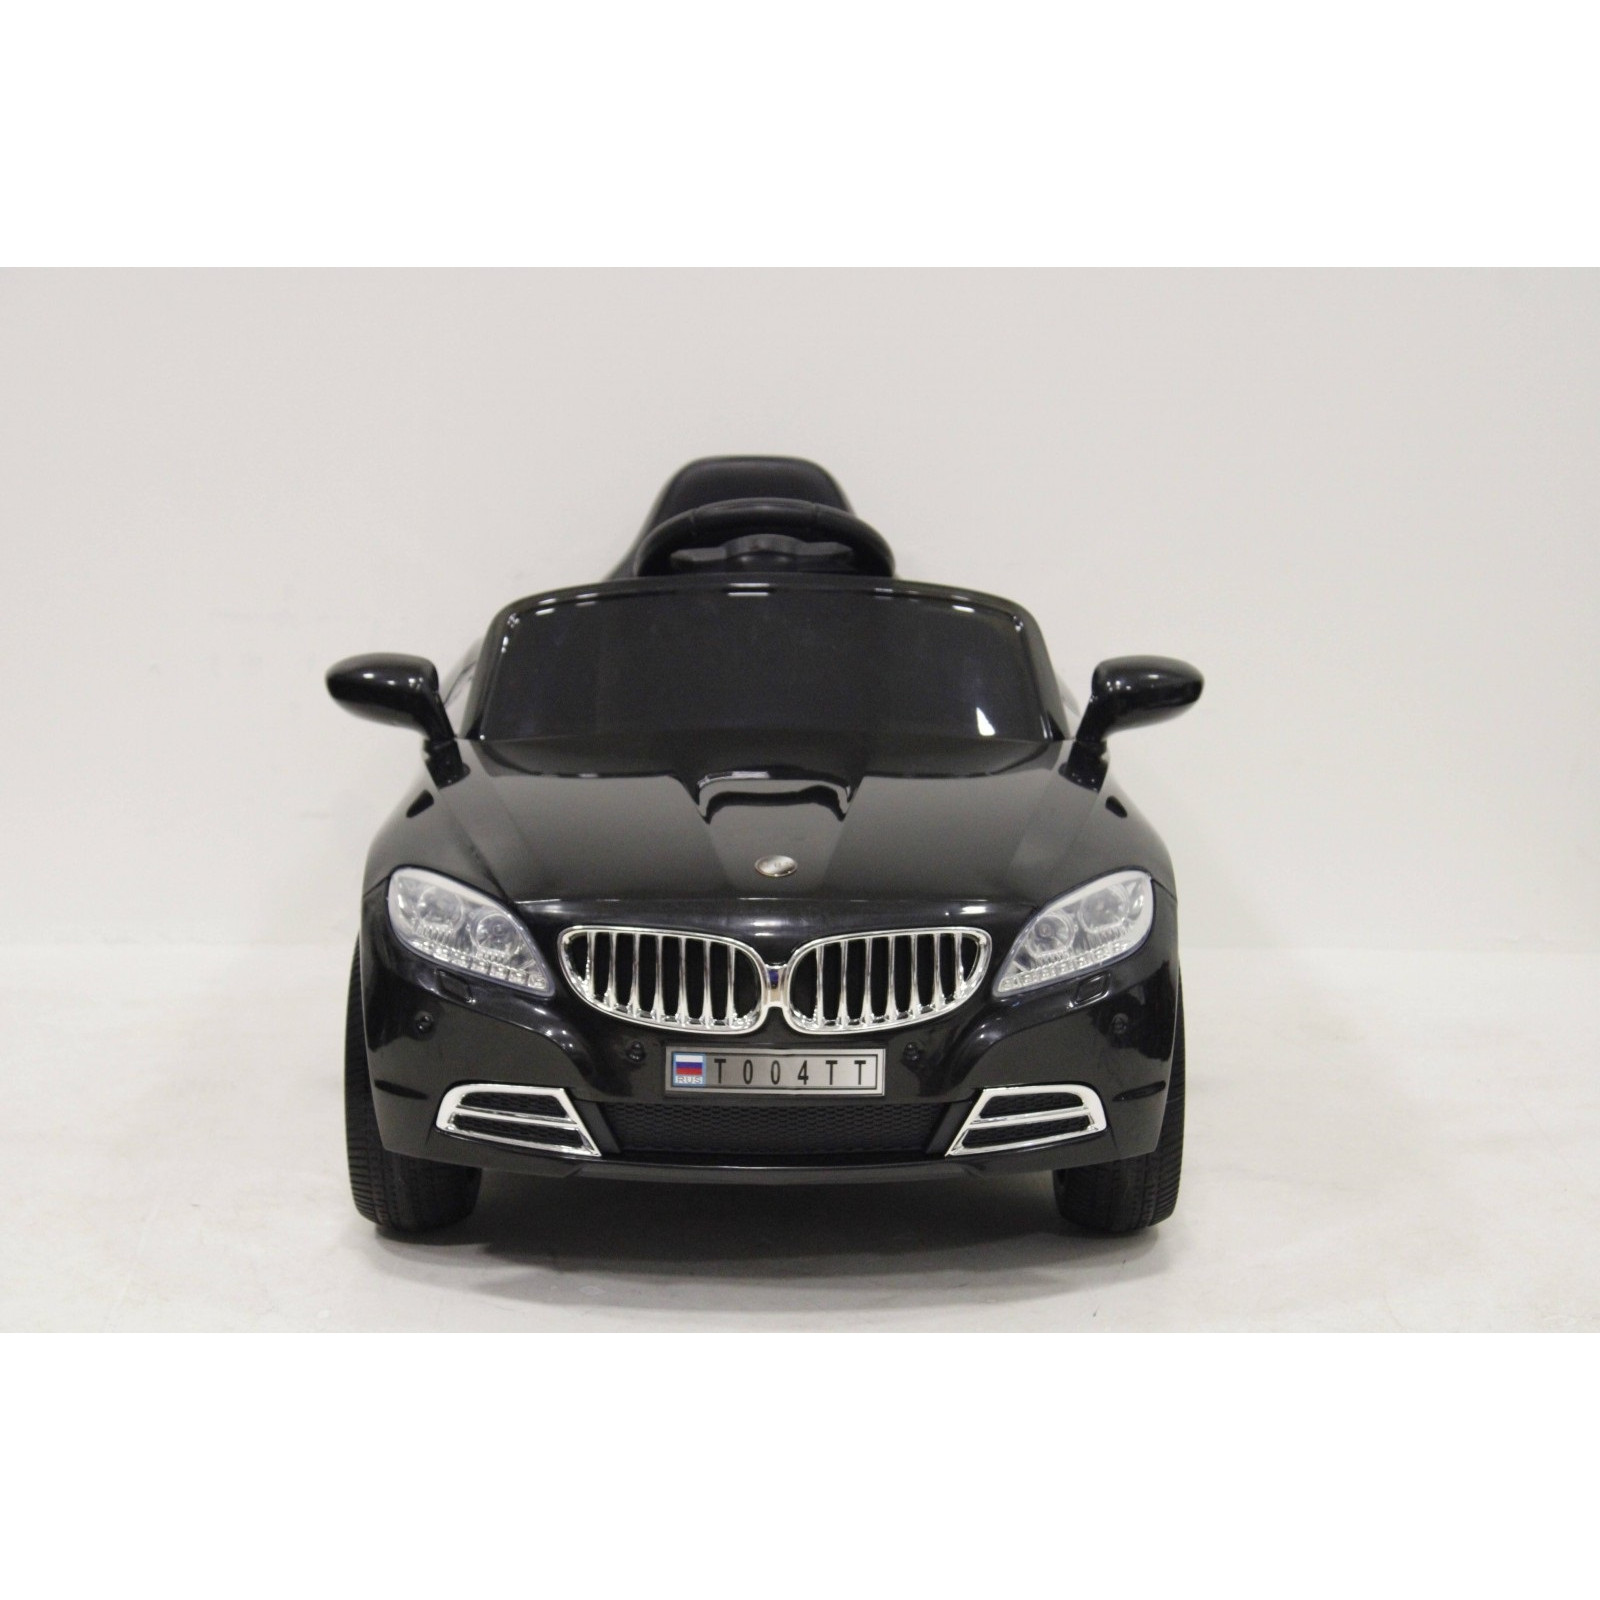 Детский электромобиль BMW (T004TT)